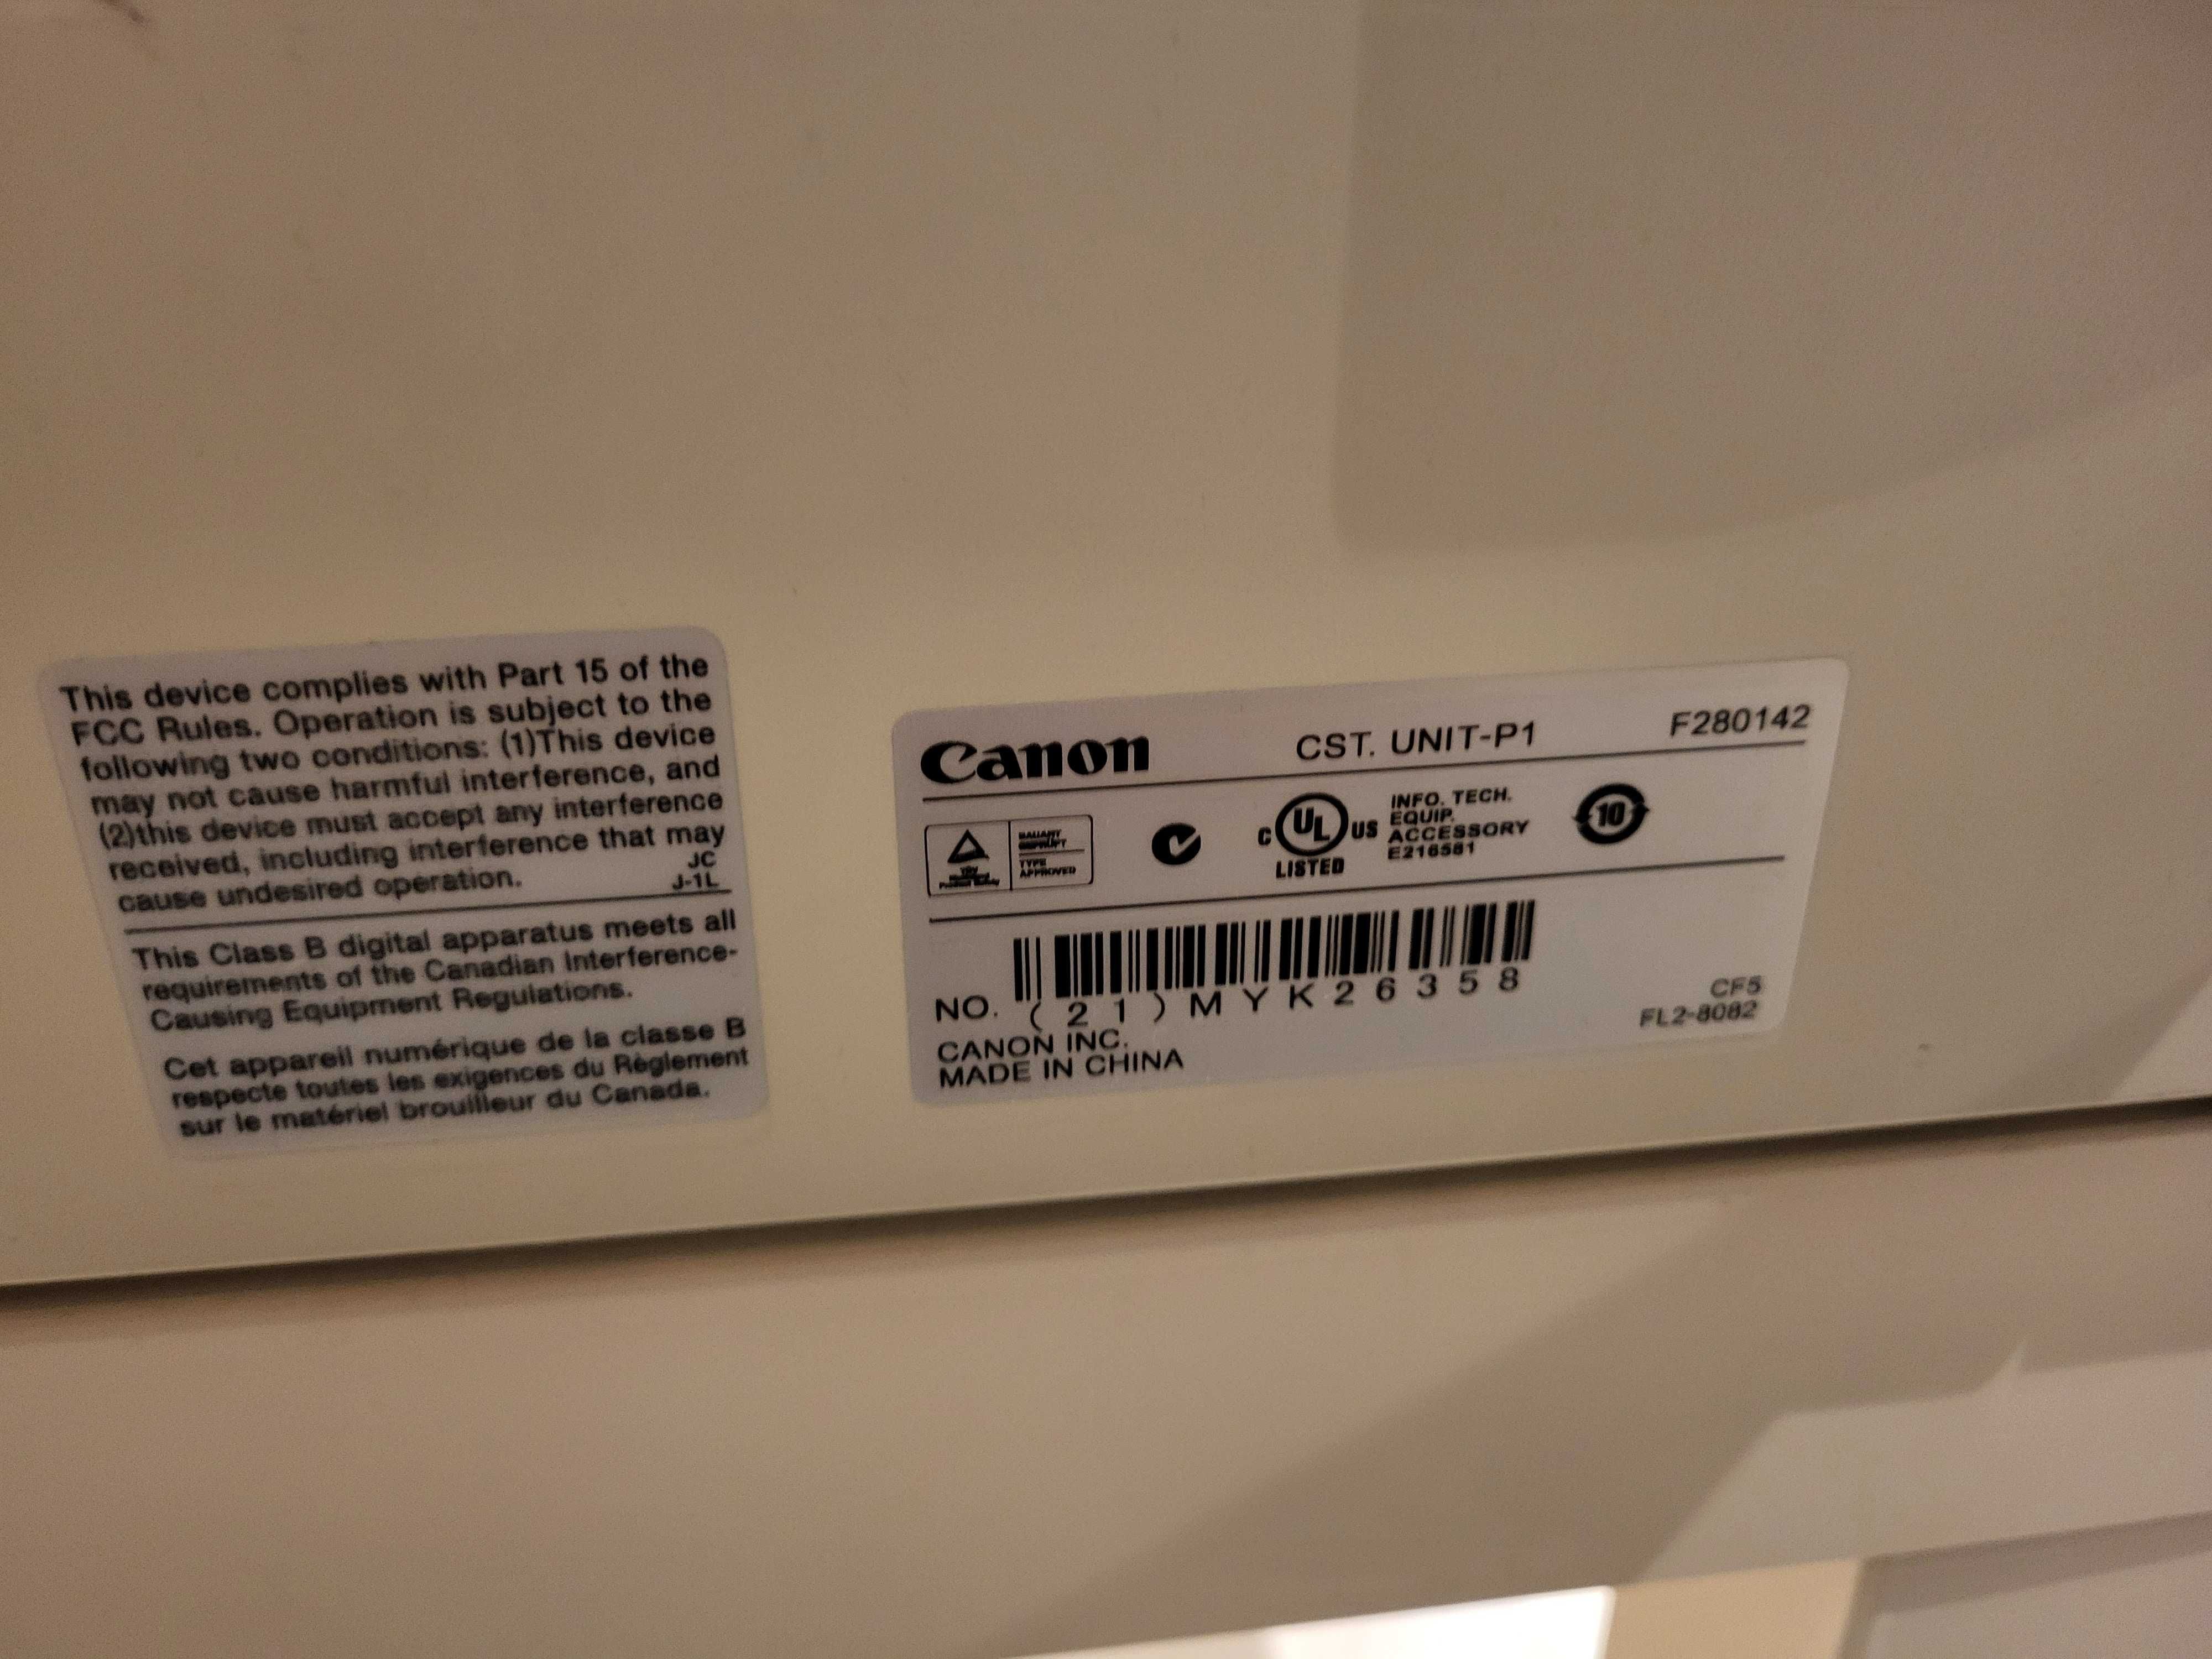 Kserokopiarka Canon iR 2018 - mało używana - faktura